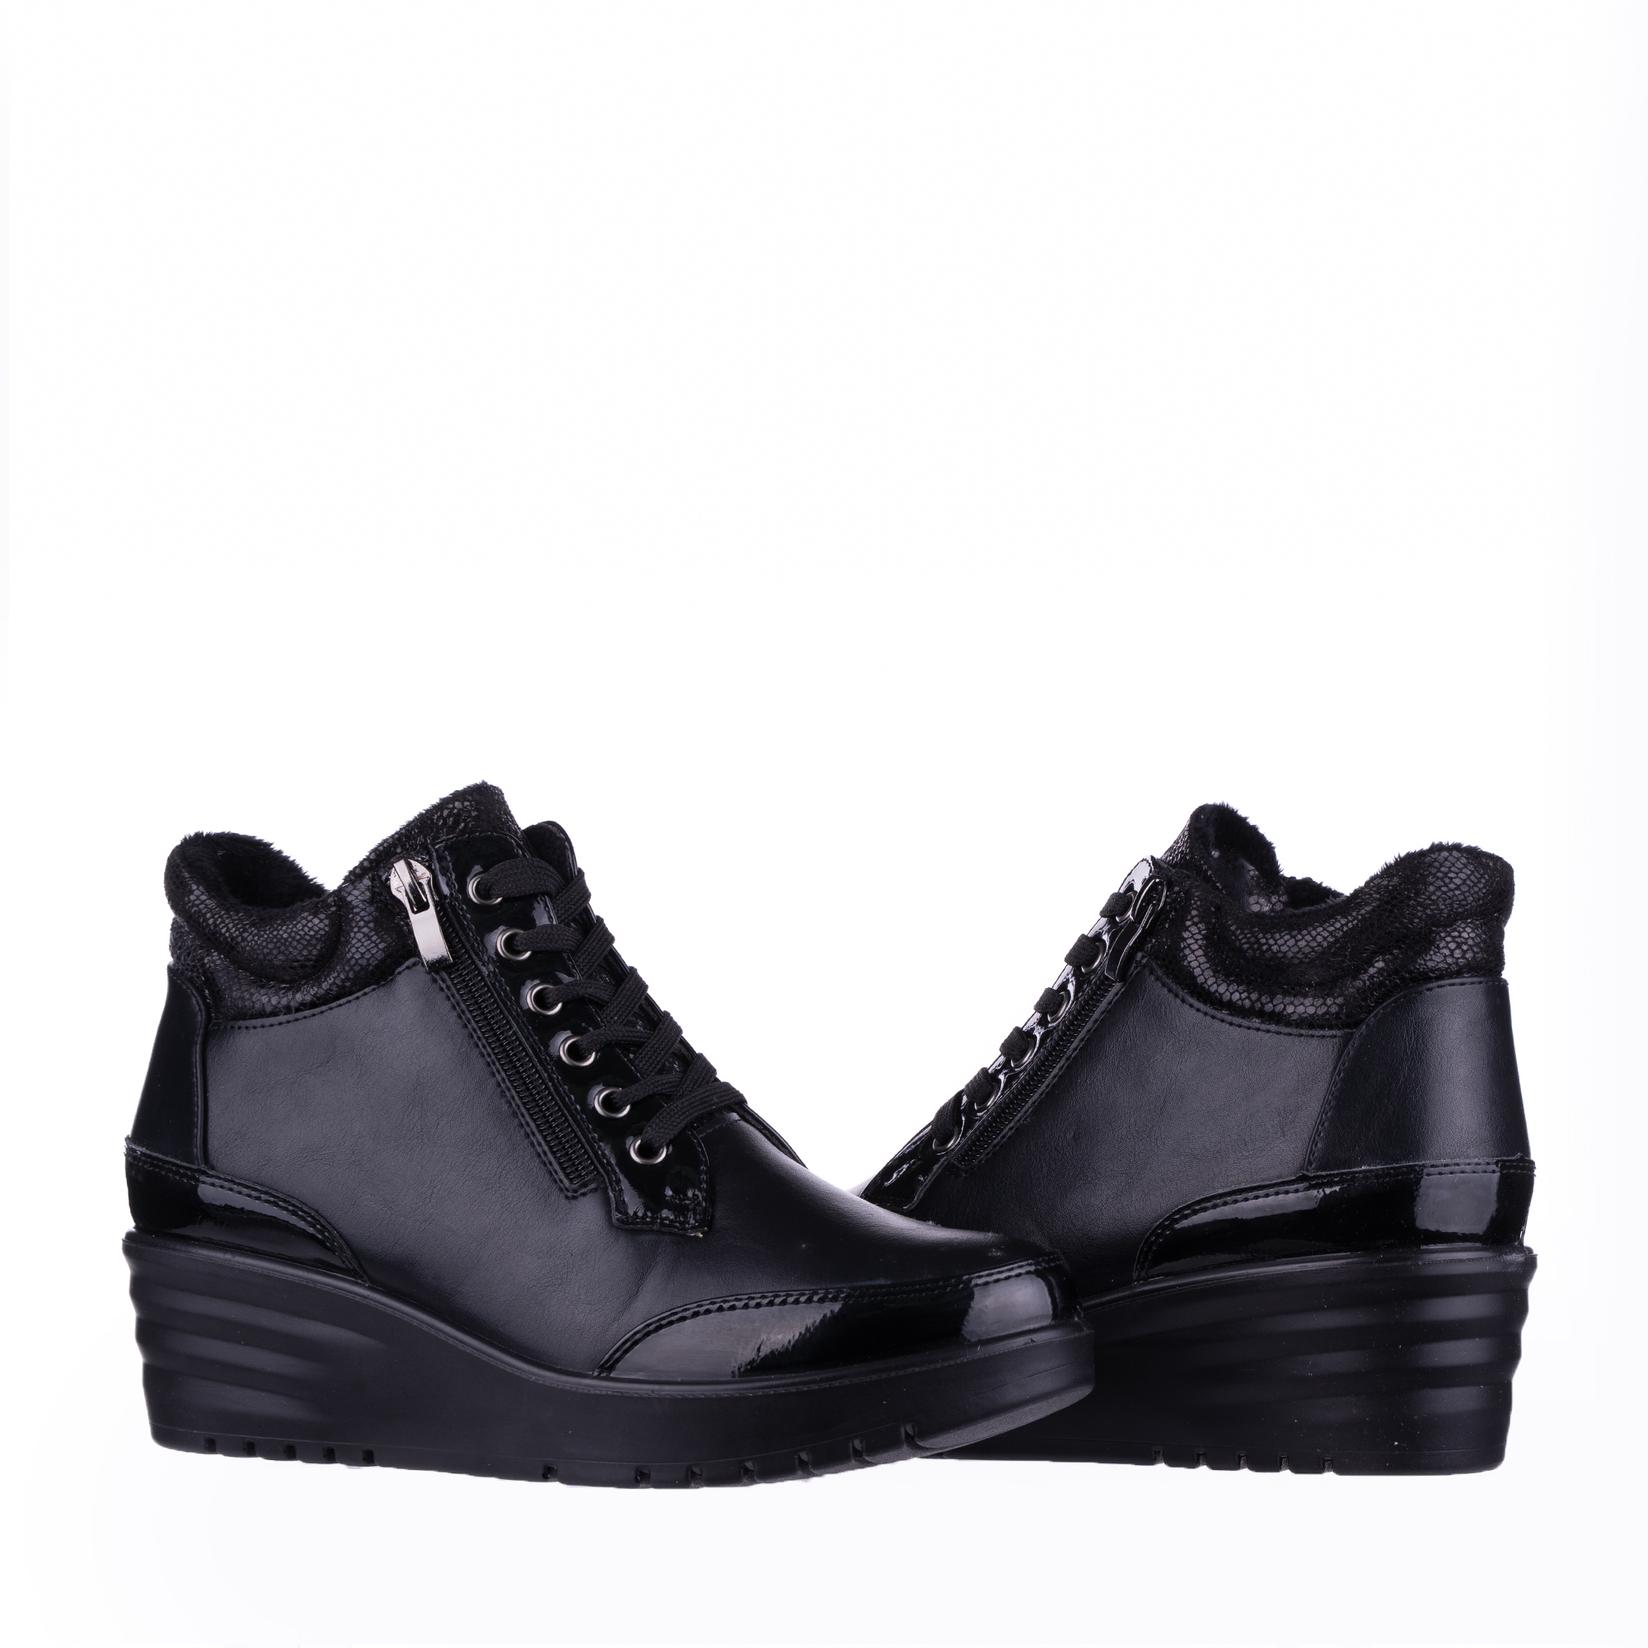 COMFORT BY LUSSO Ženske cipele N75625, Crne